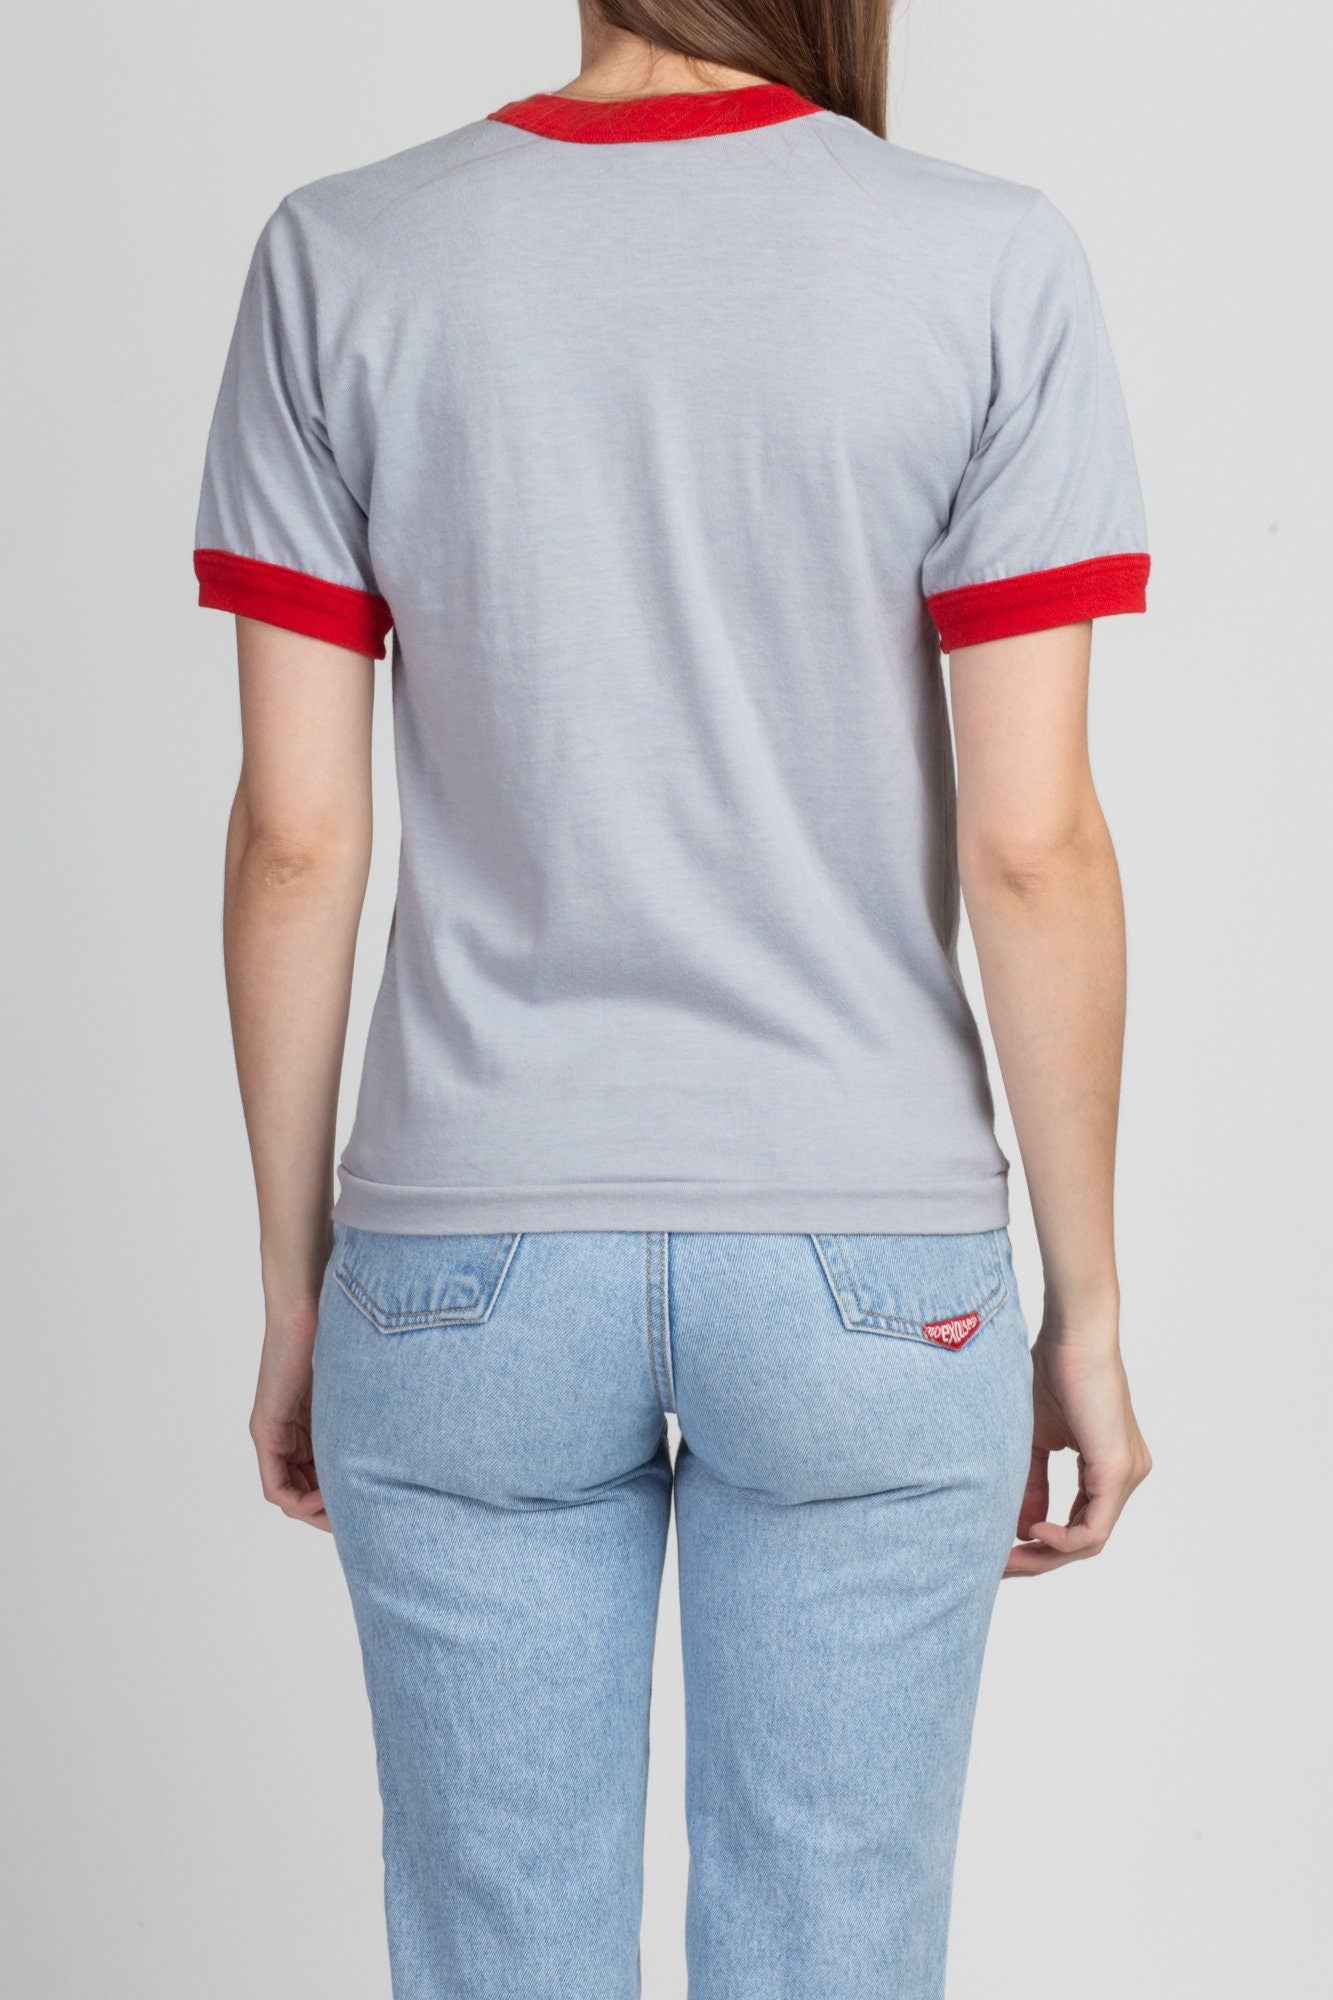 Vintage Men's T-Shirt - Red - XS